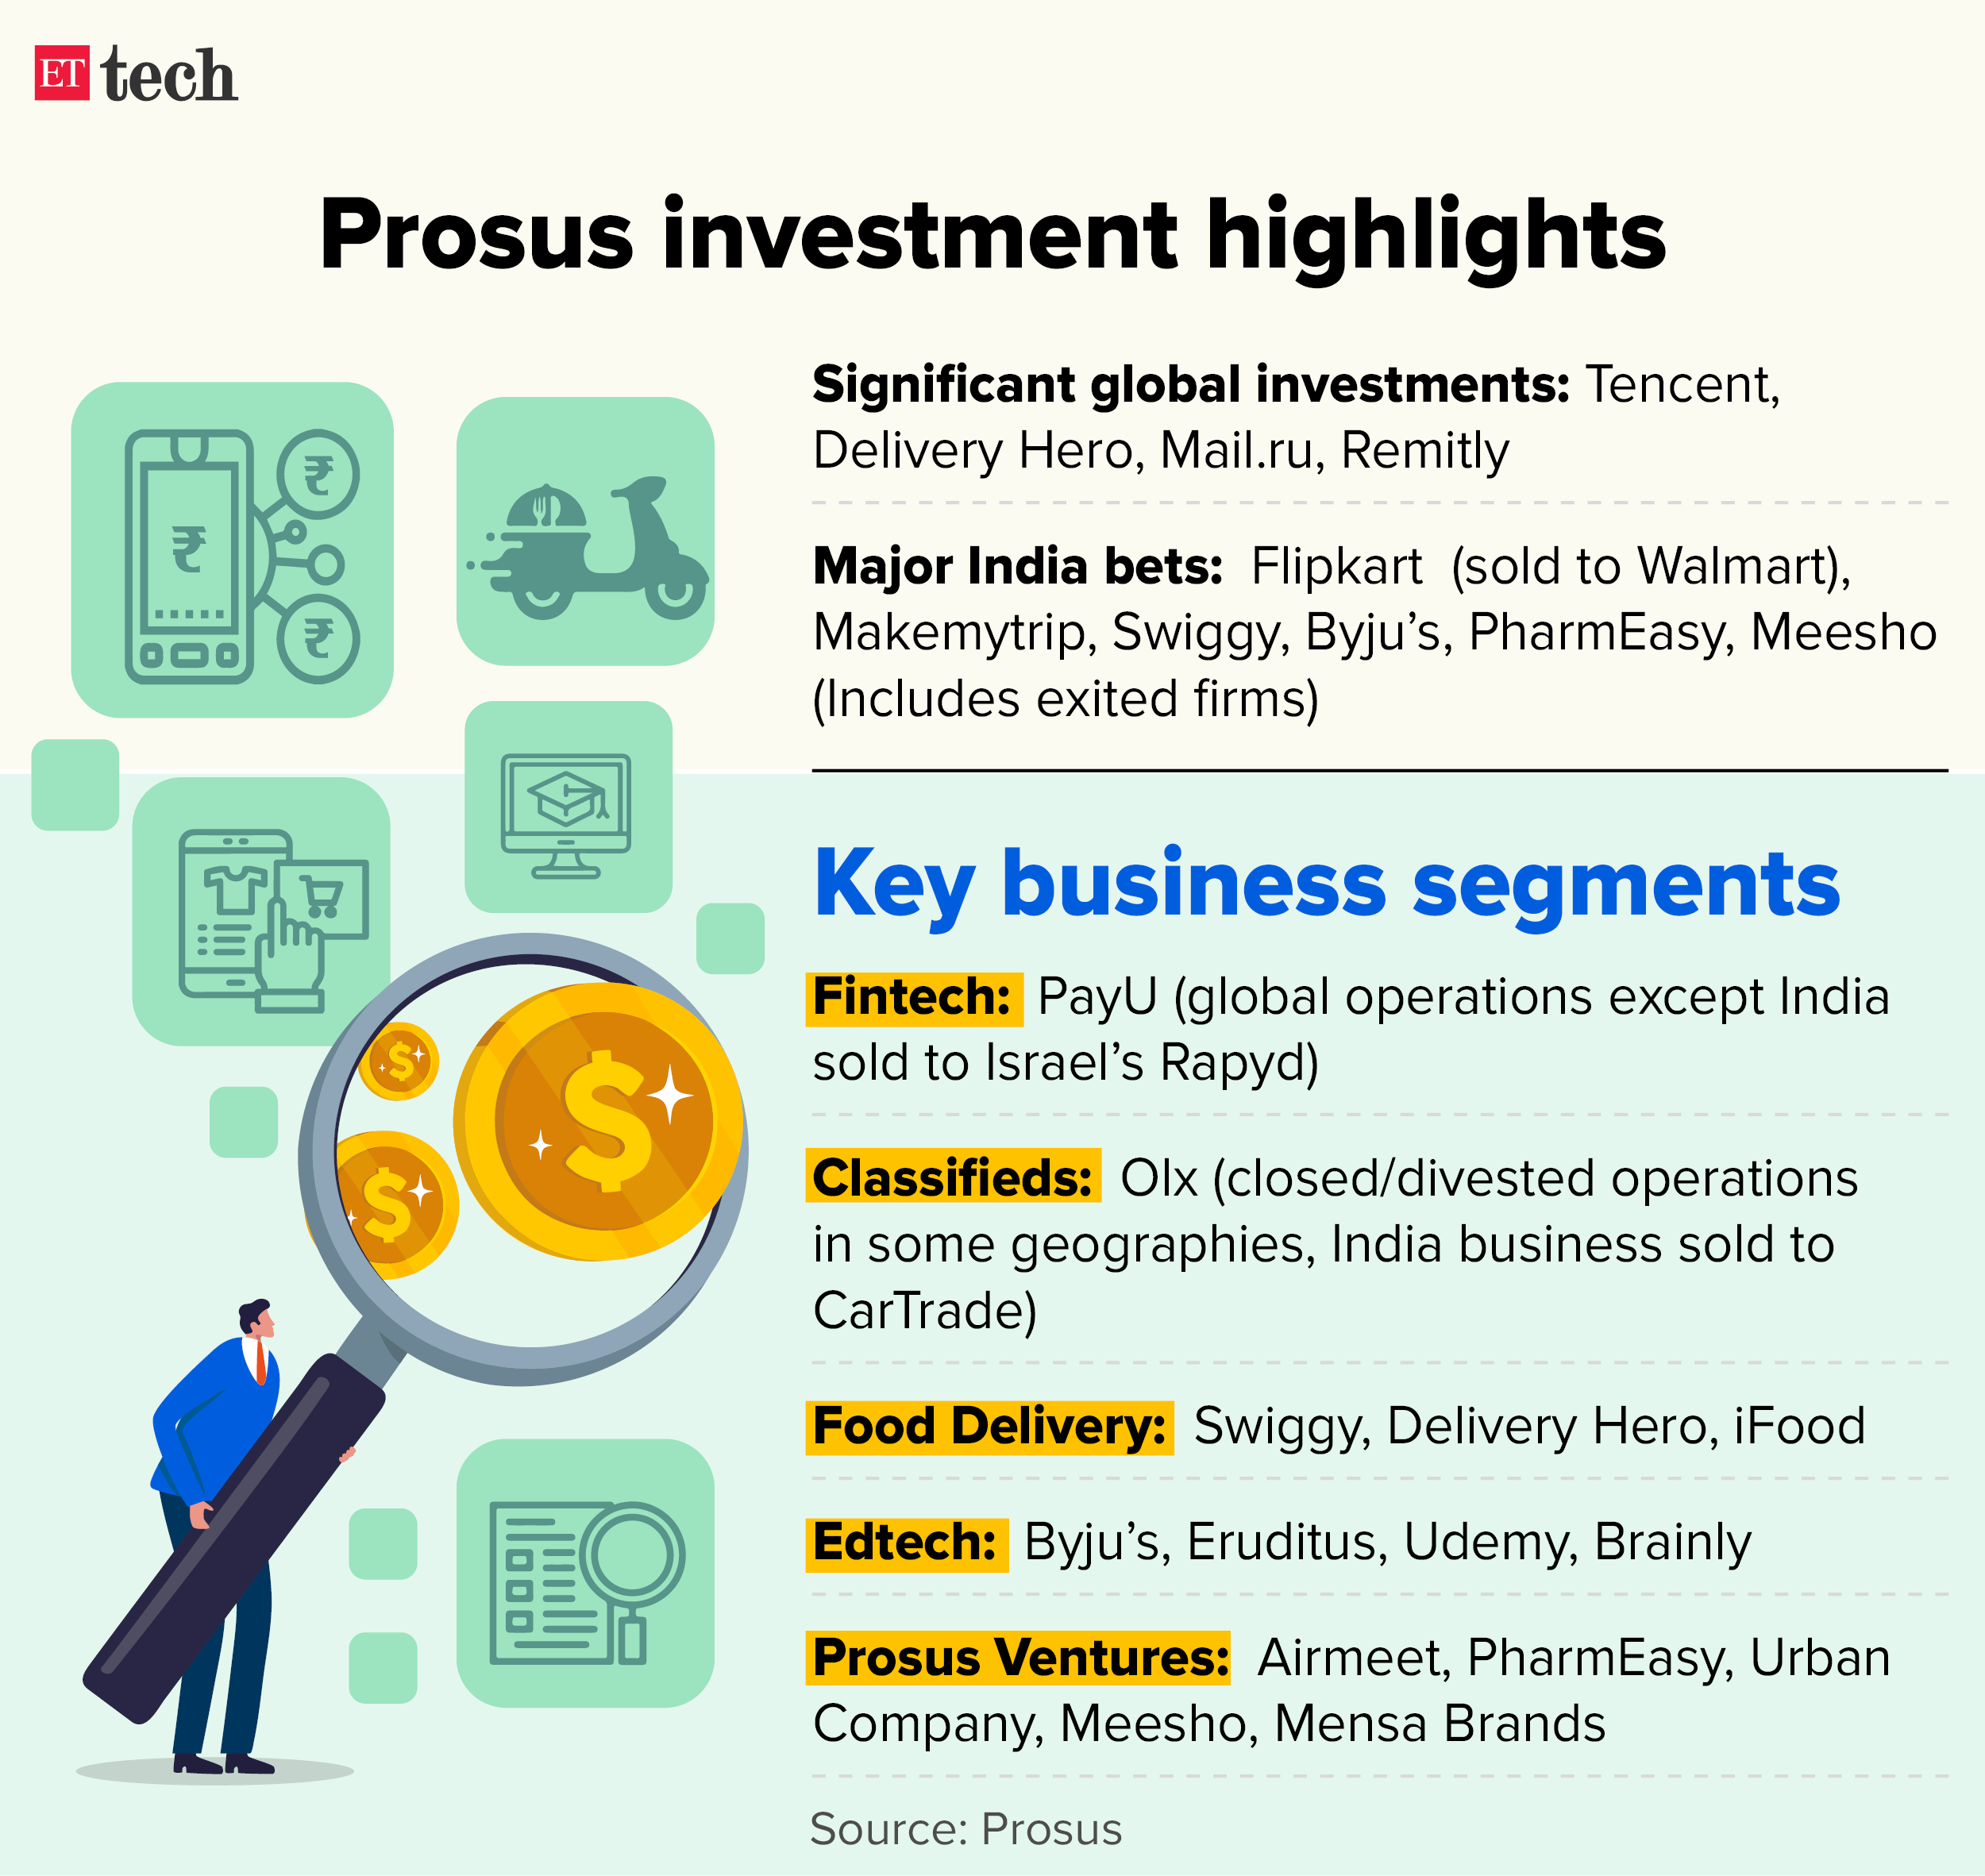 Prosus investment highlights